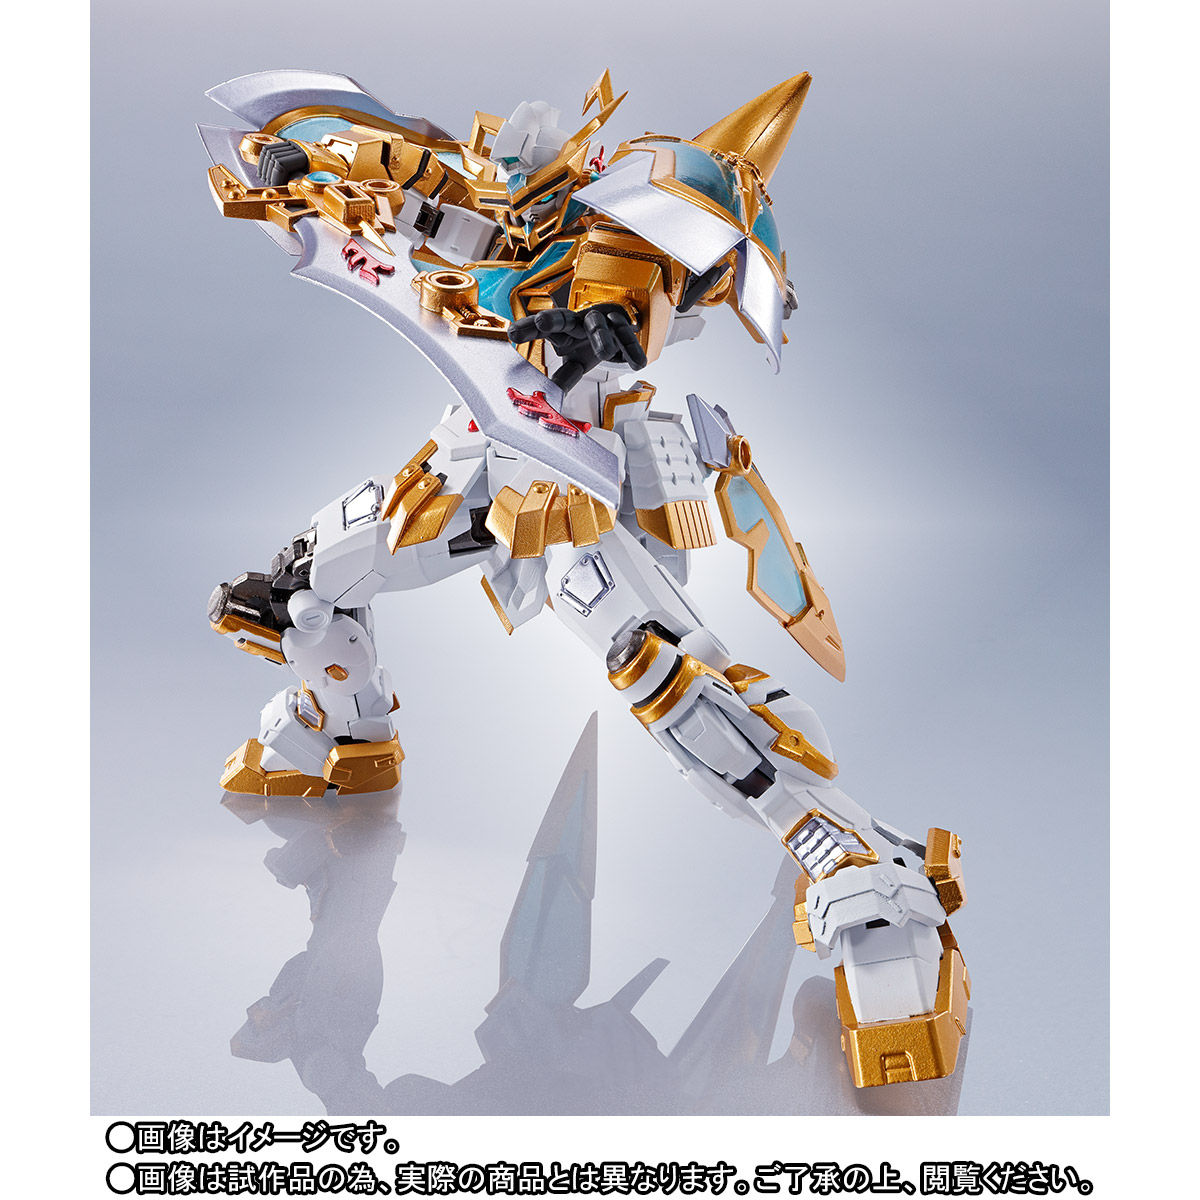 Metal Robot Spirits(Side MS) Sun Quan Gundam(Real Type)